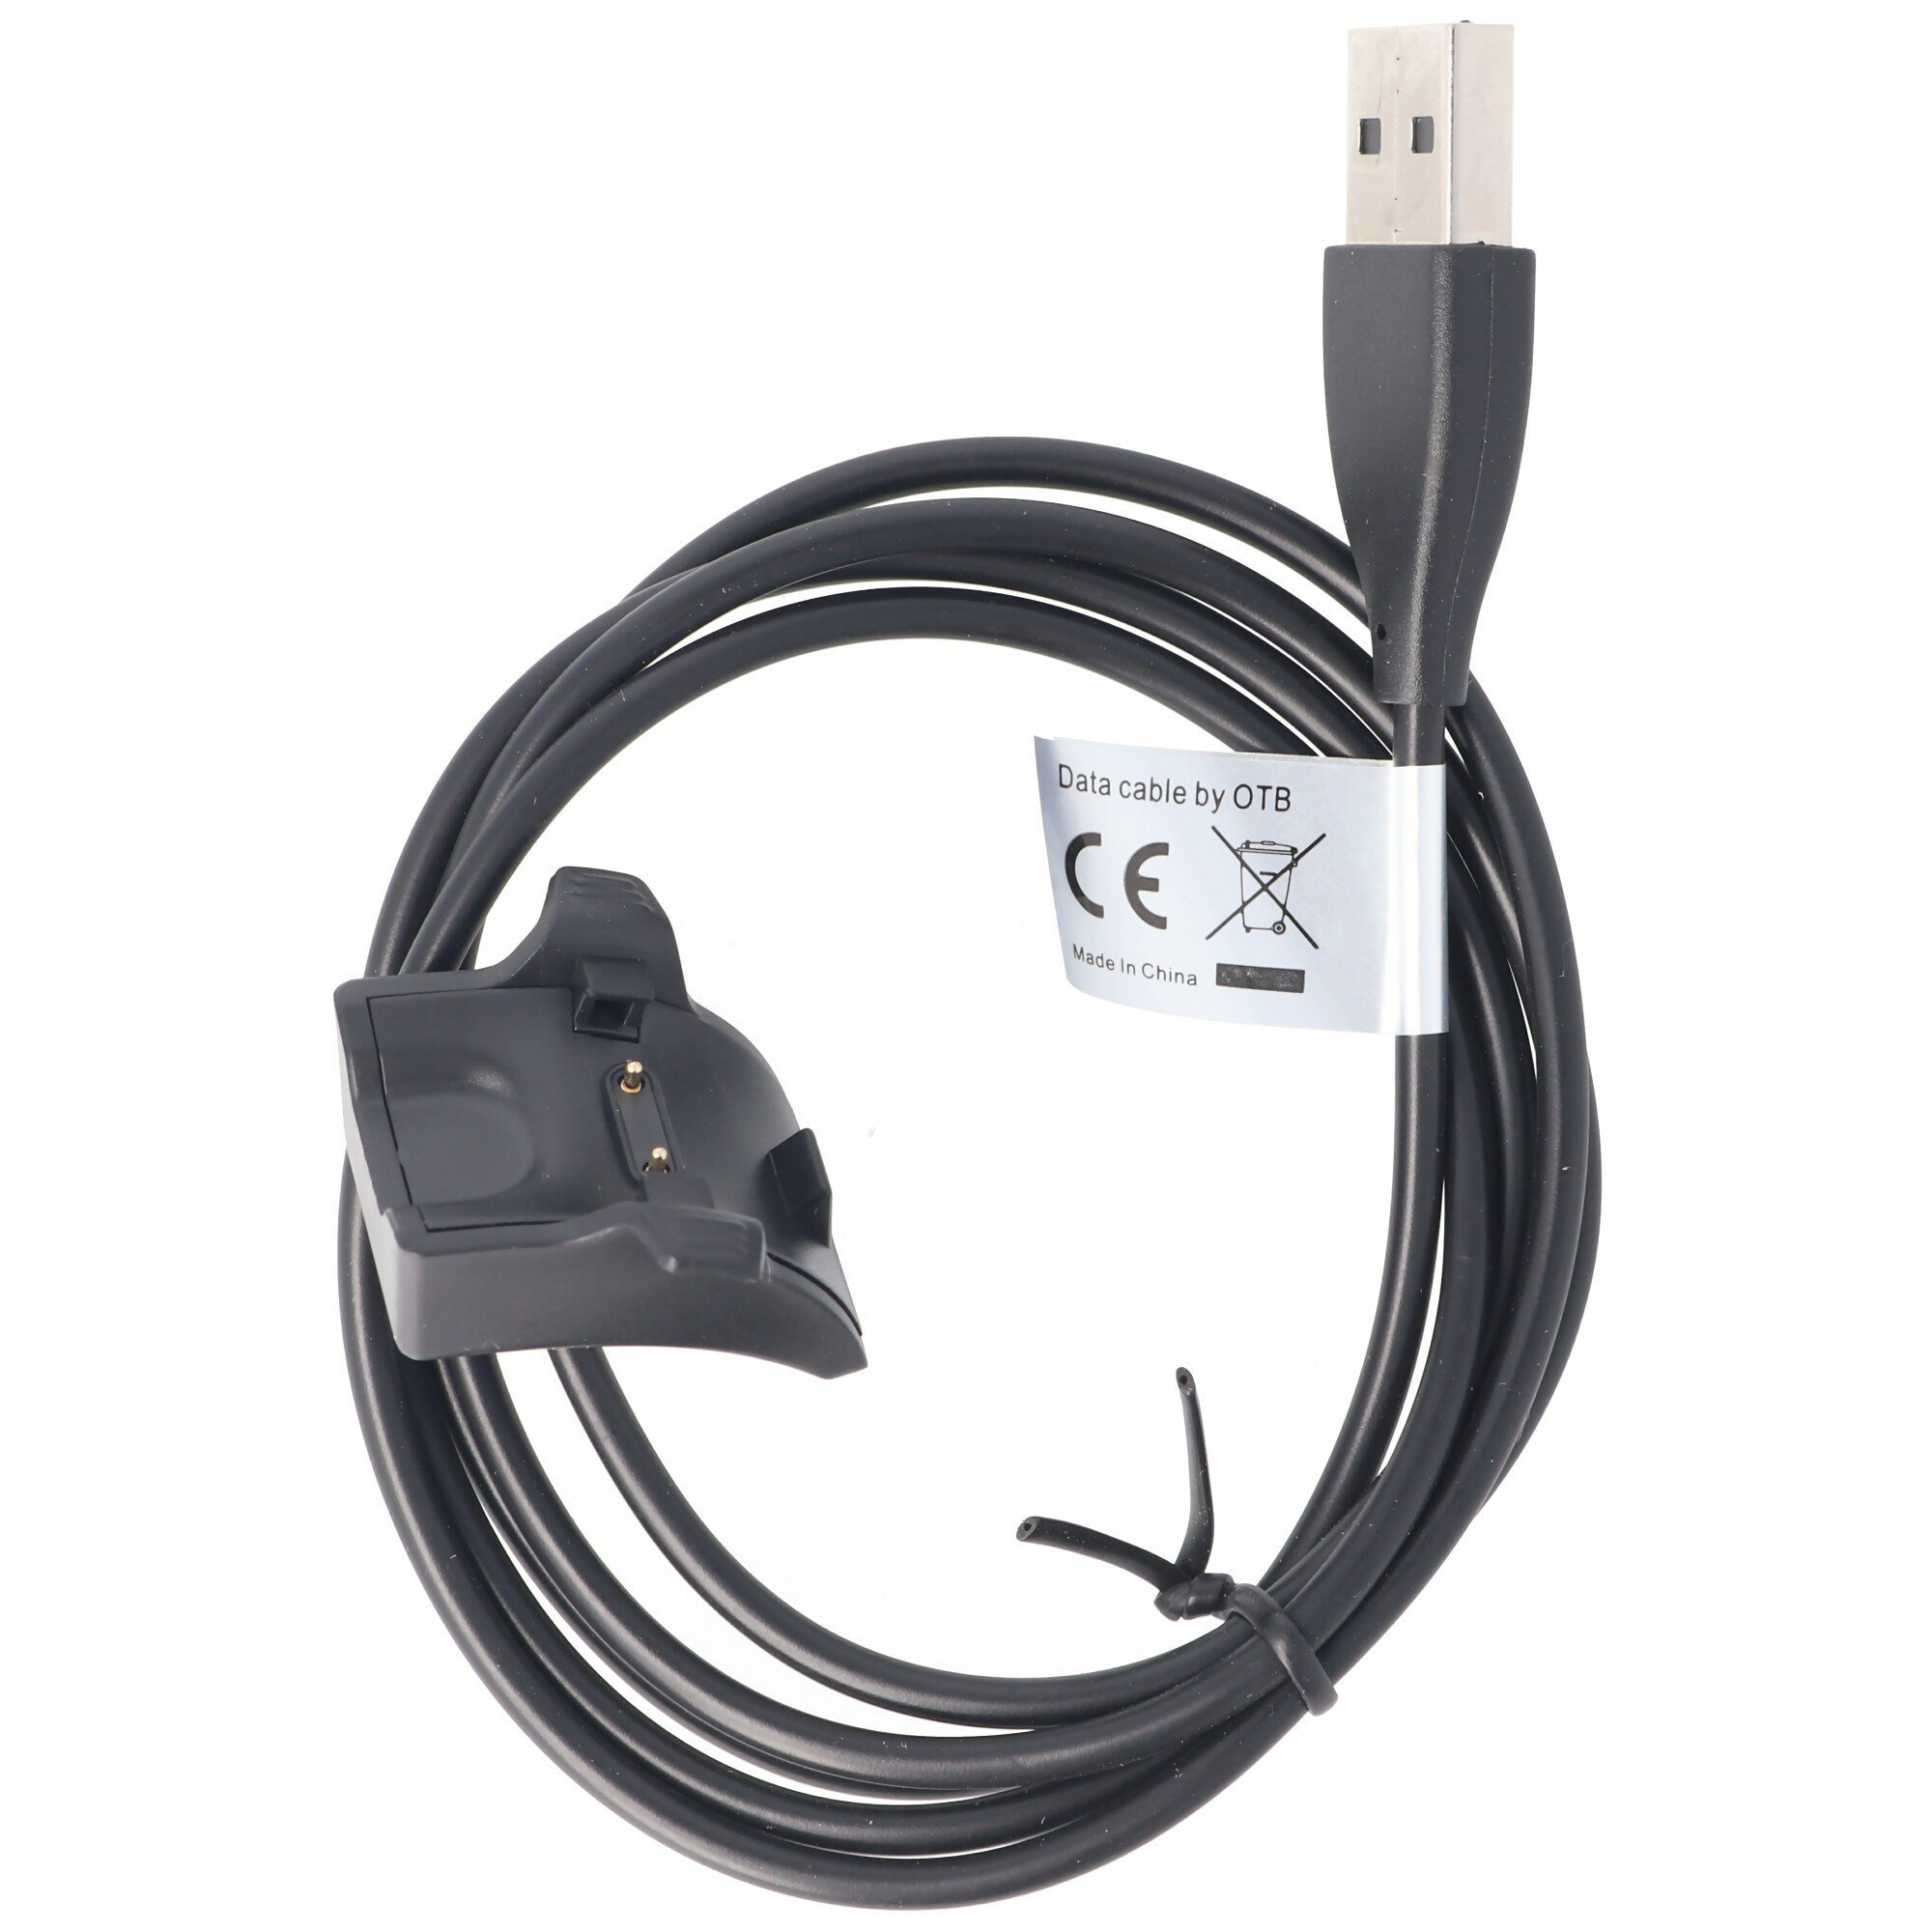 USB şarj kablosu Huawei Band 2 spor izci için uygun, Band 2 Pro, Huawei Band  3,